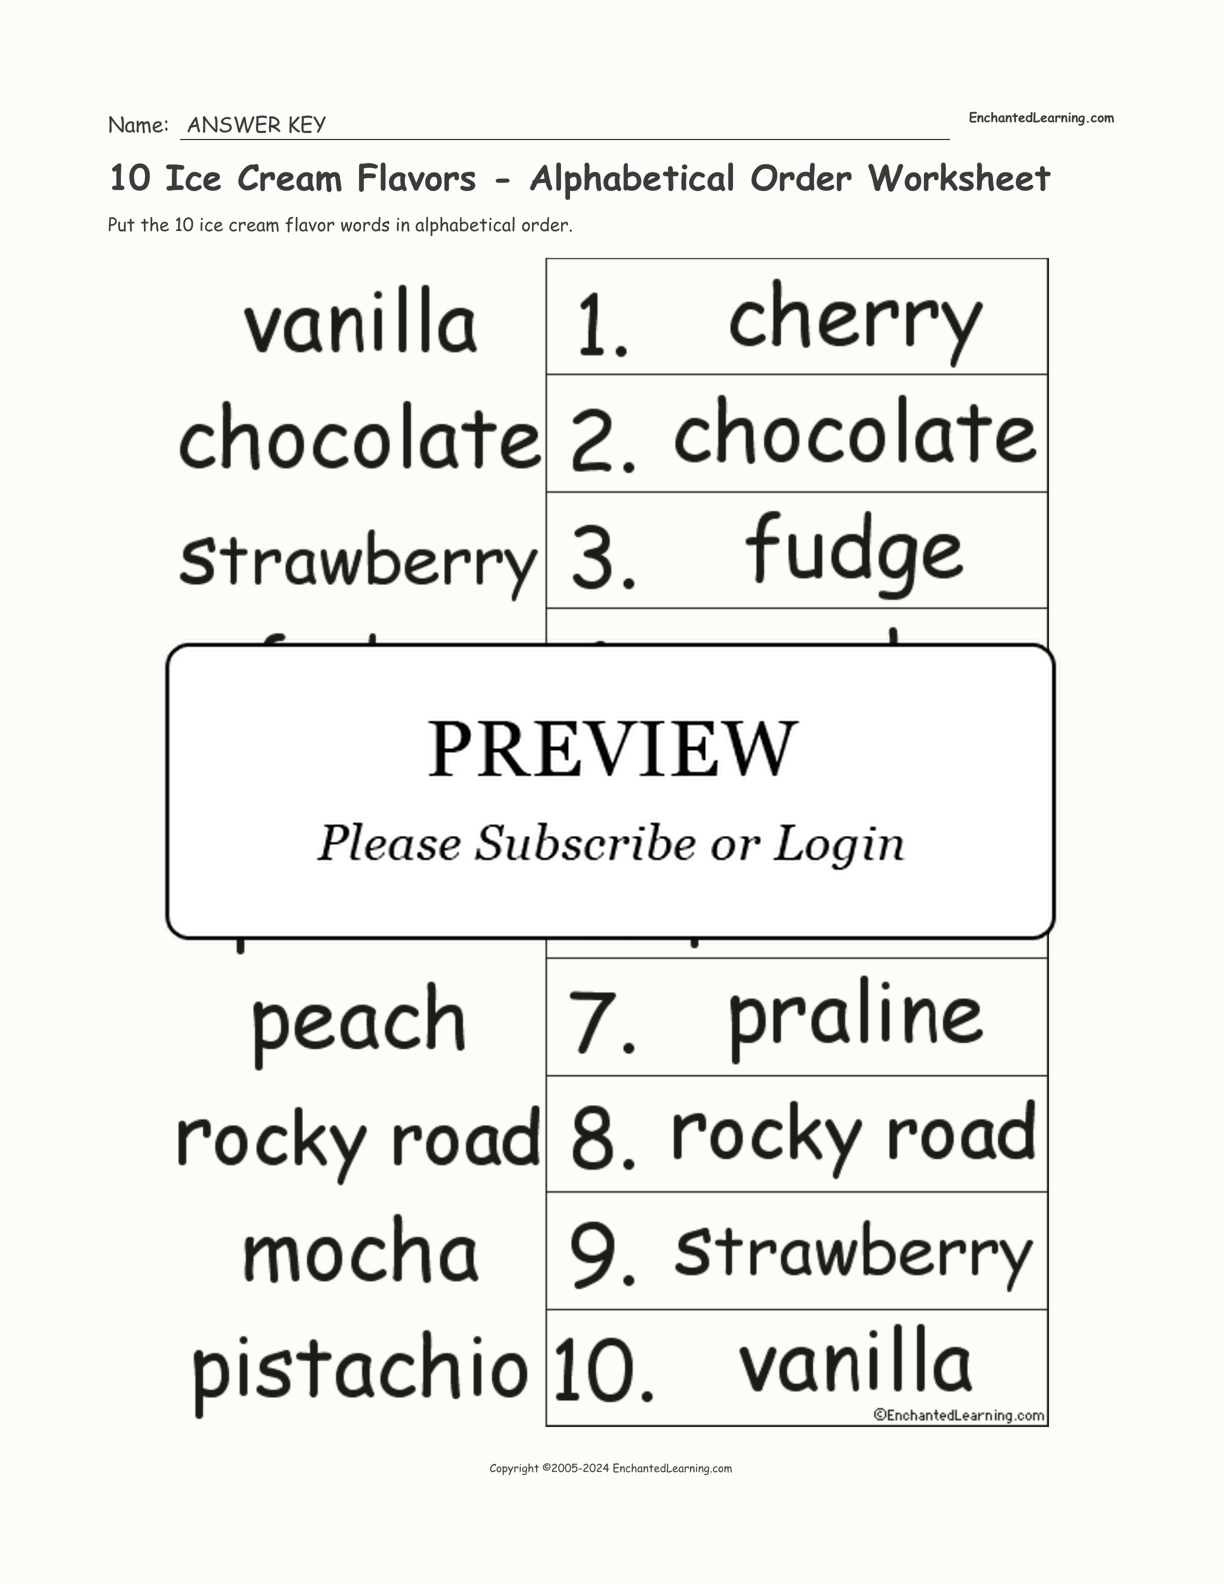 10 Ice Cream Flavors - Alphabetical Order Worksheet interactive worksheet page 2